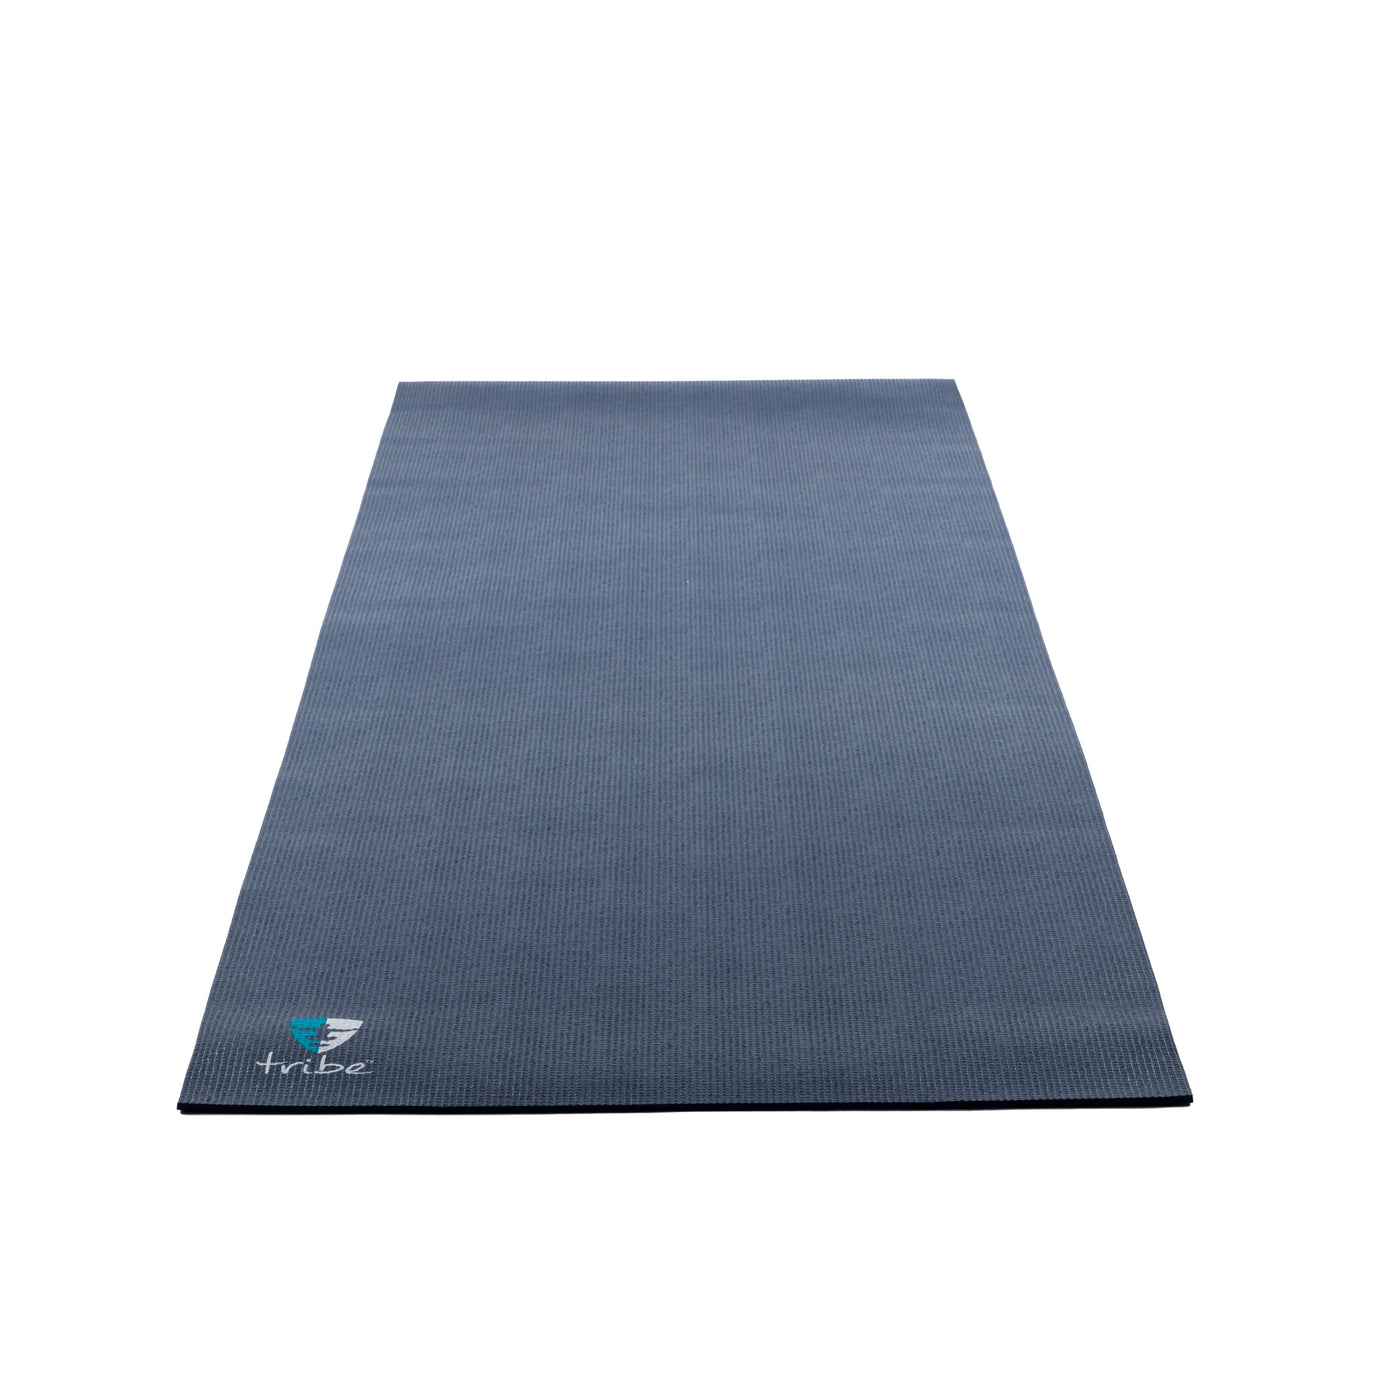 TRIBE ReGen 5mm Yoga Mat - Vintage Indigo - unfurled | Eco Yoga Store